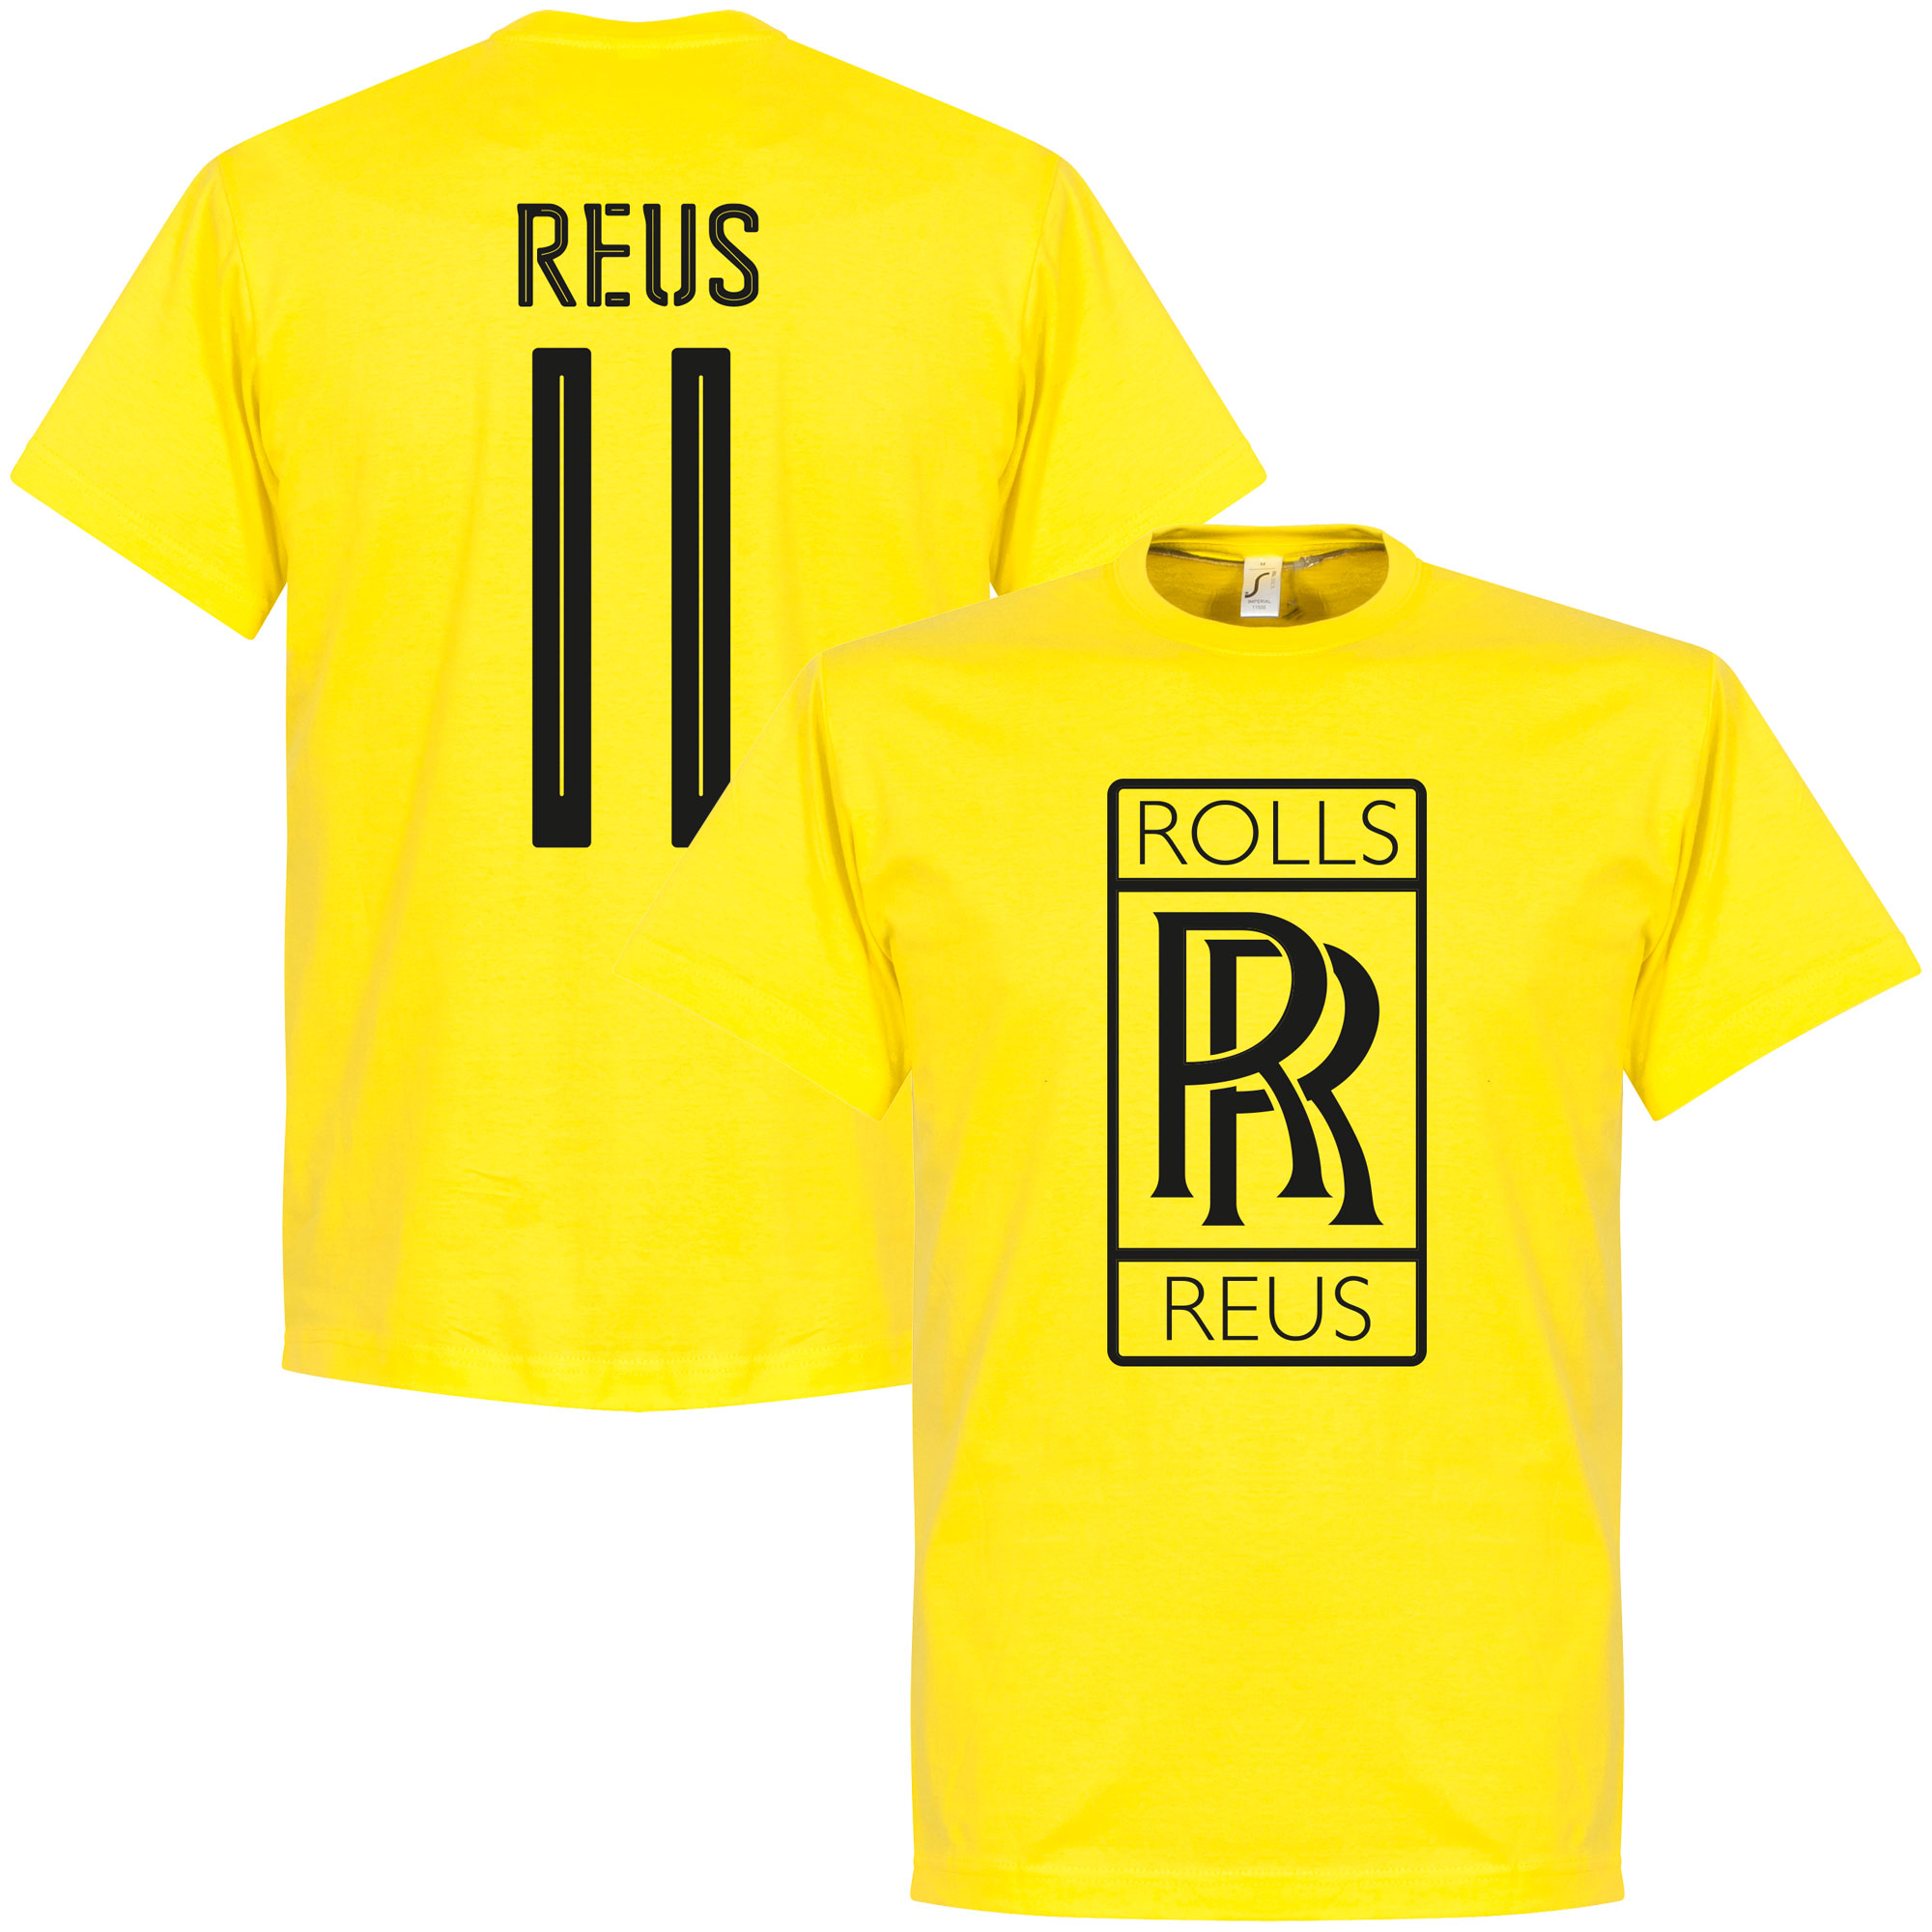 Rolls Reus 11 Dortmund T-Shirt